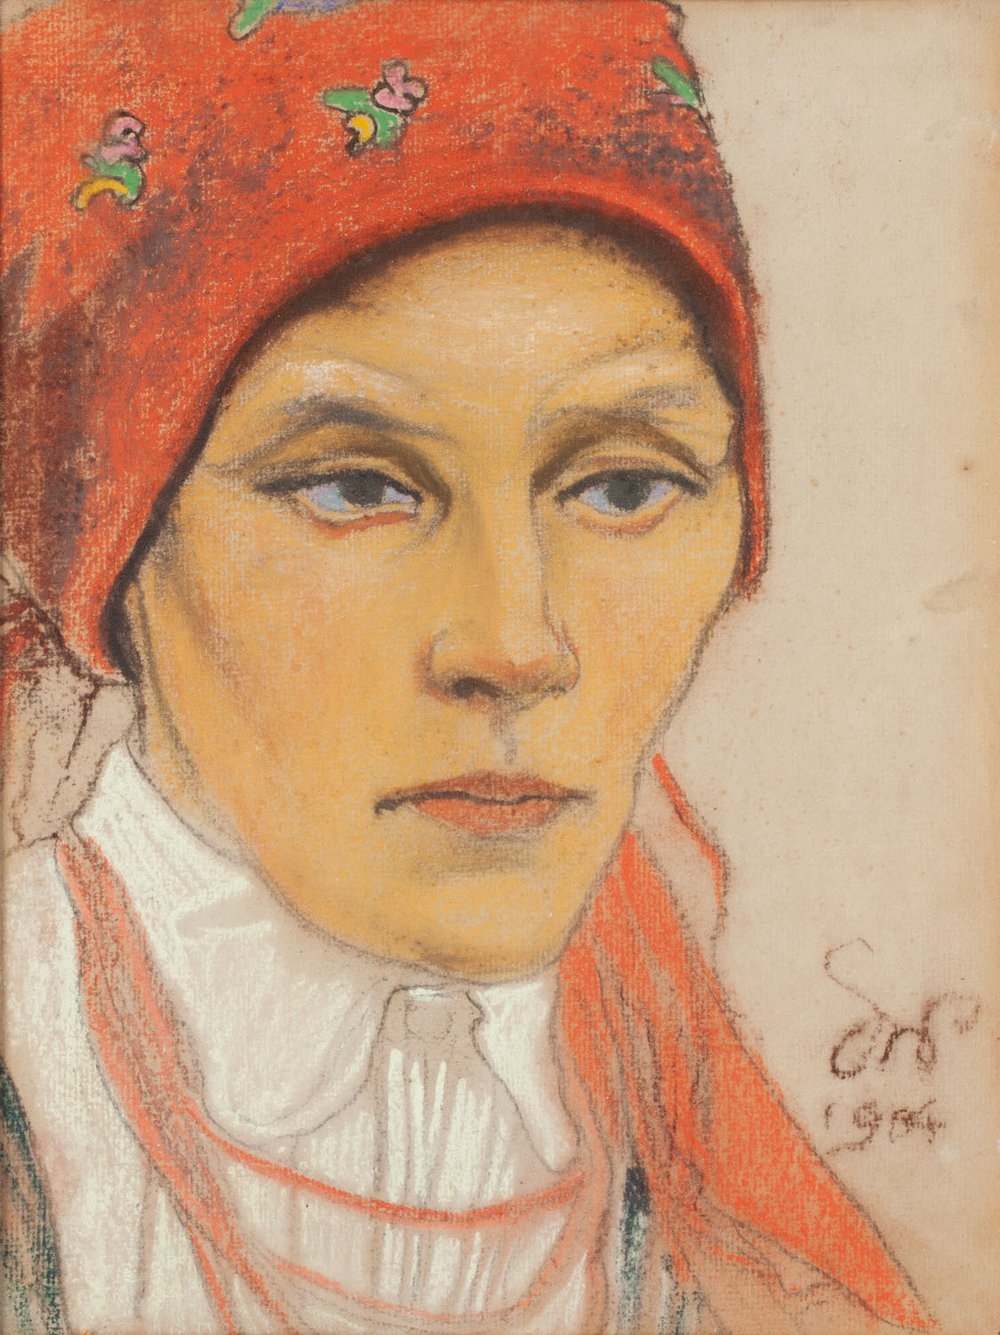 Artwork by Stanislaw Wyspianski, Portrait of a peasant woman, Made of pastel